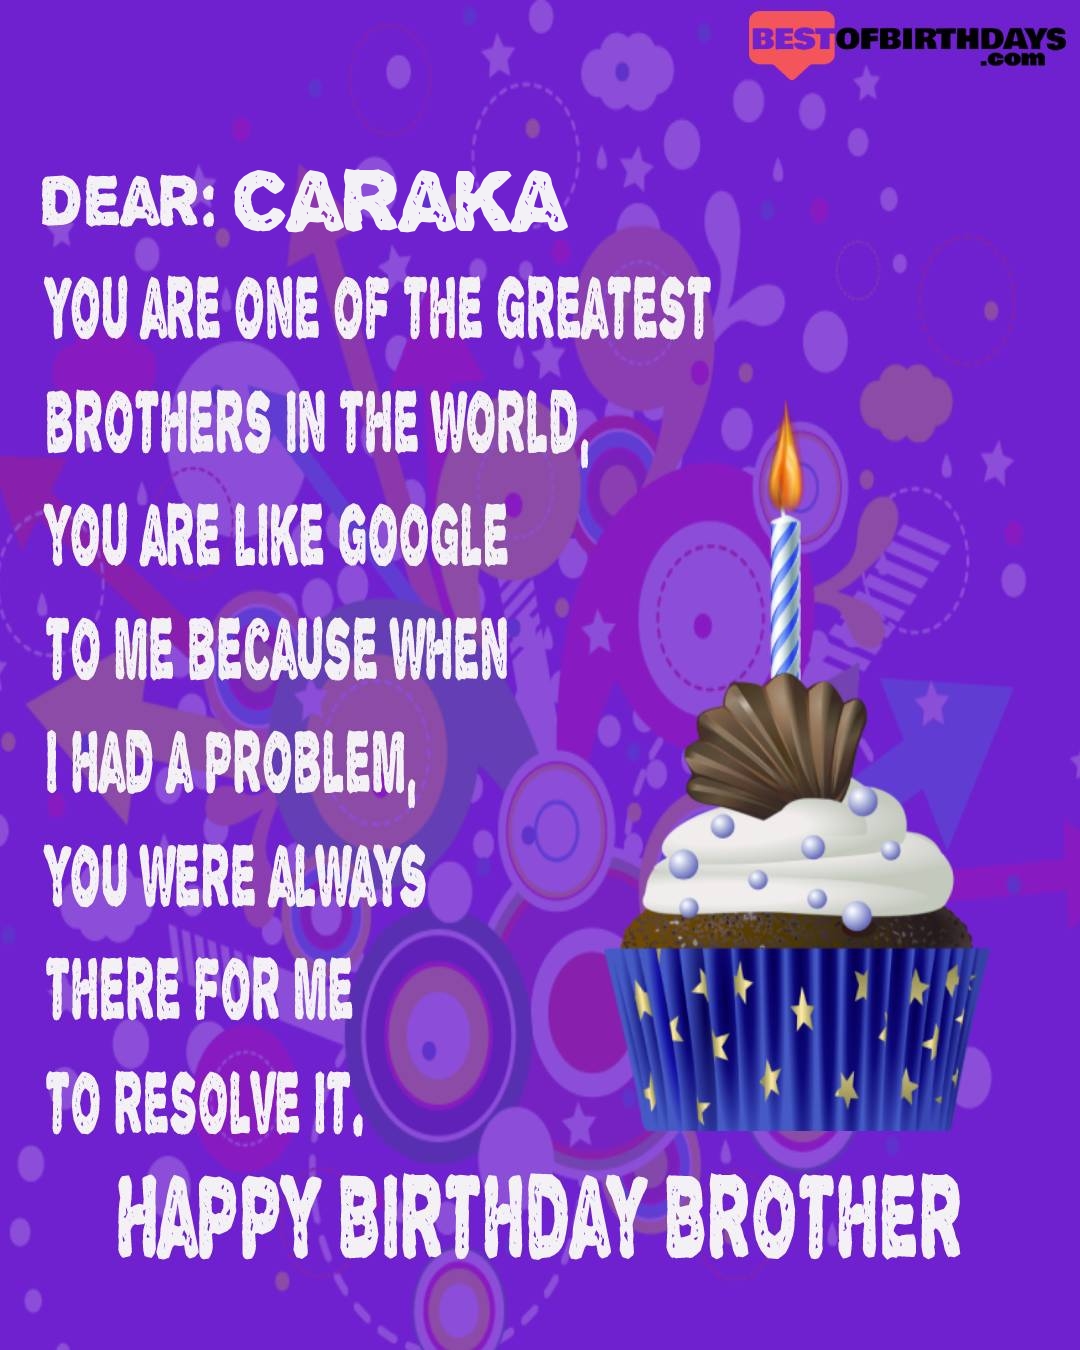 Happy birthday caraka bhai brother bro